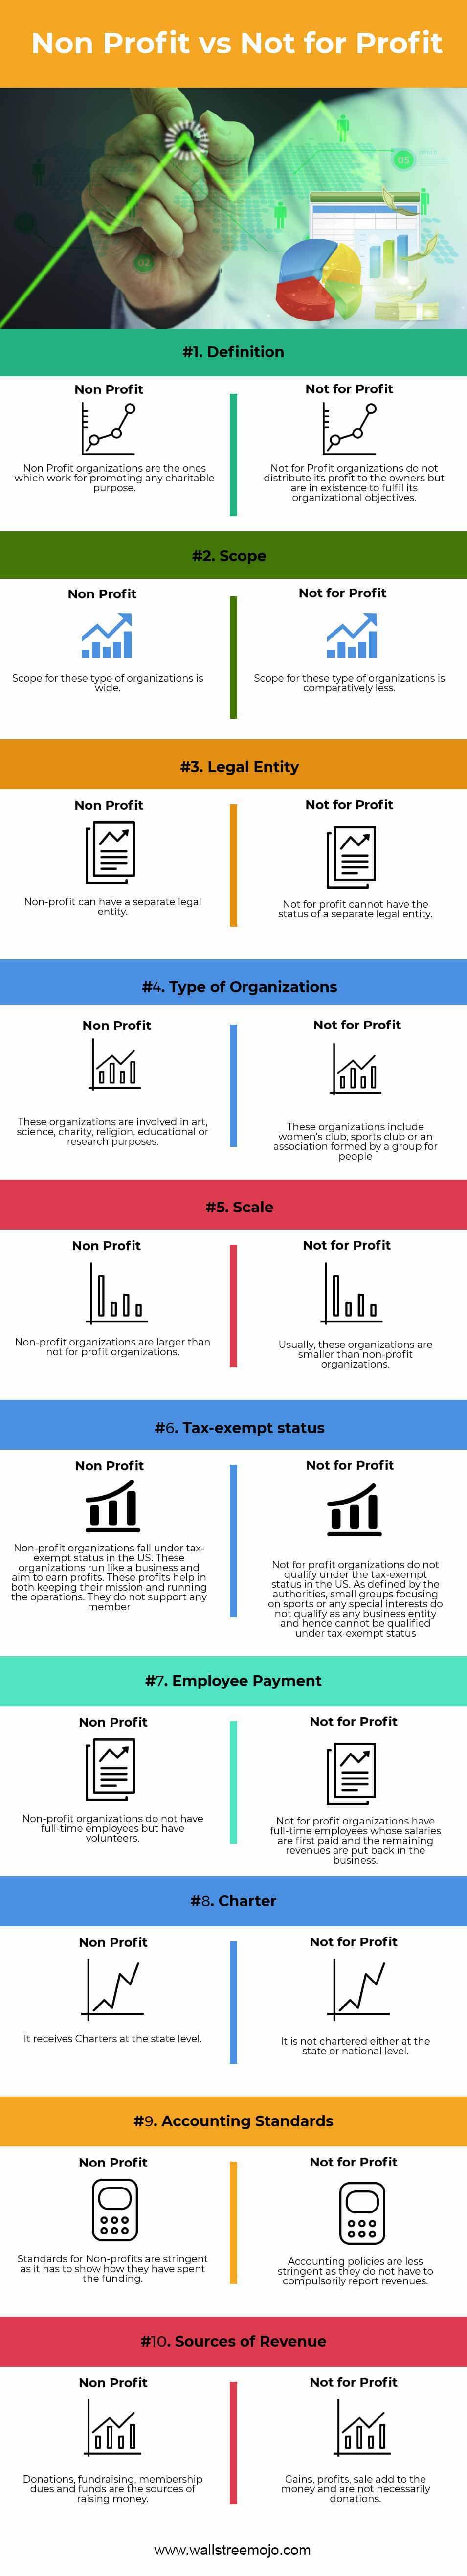 Non Profit Comparison Chart